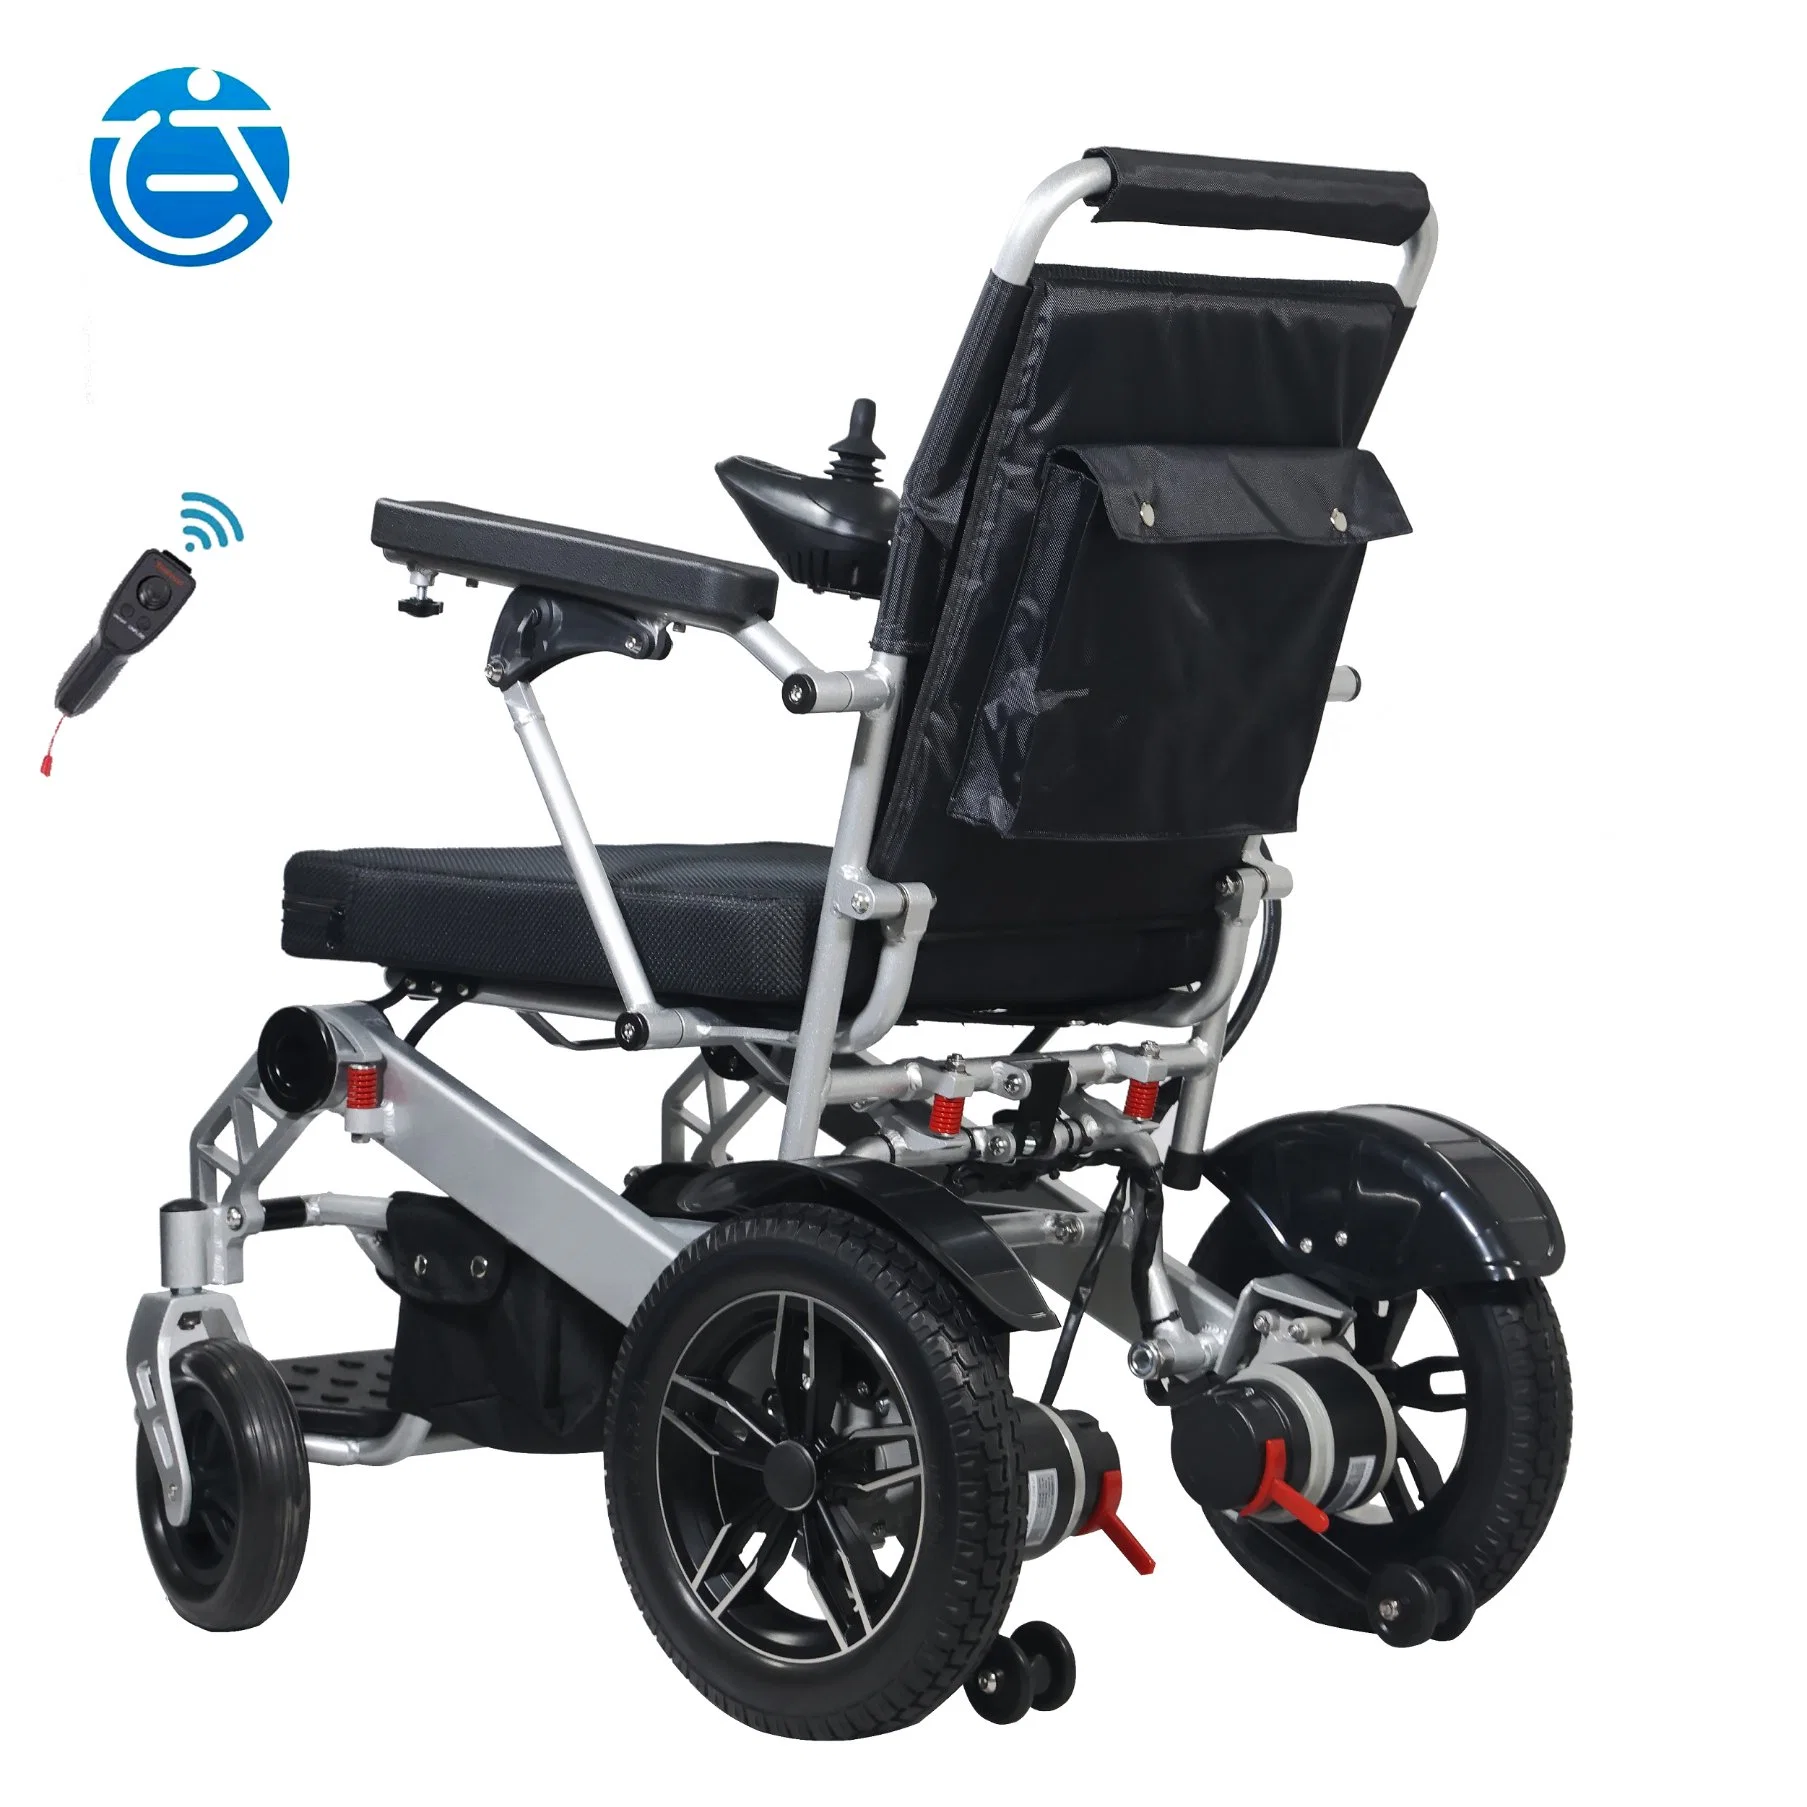 Fold Up Intelligent Automatic Lightweight Folding Electric Rollstuhl für Behinderte Ältere Menschen